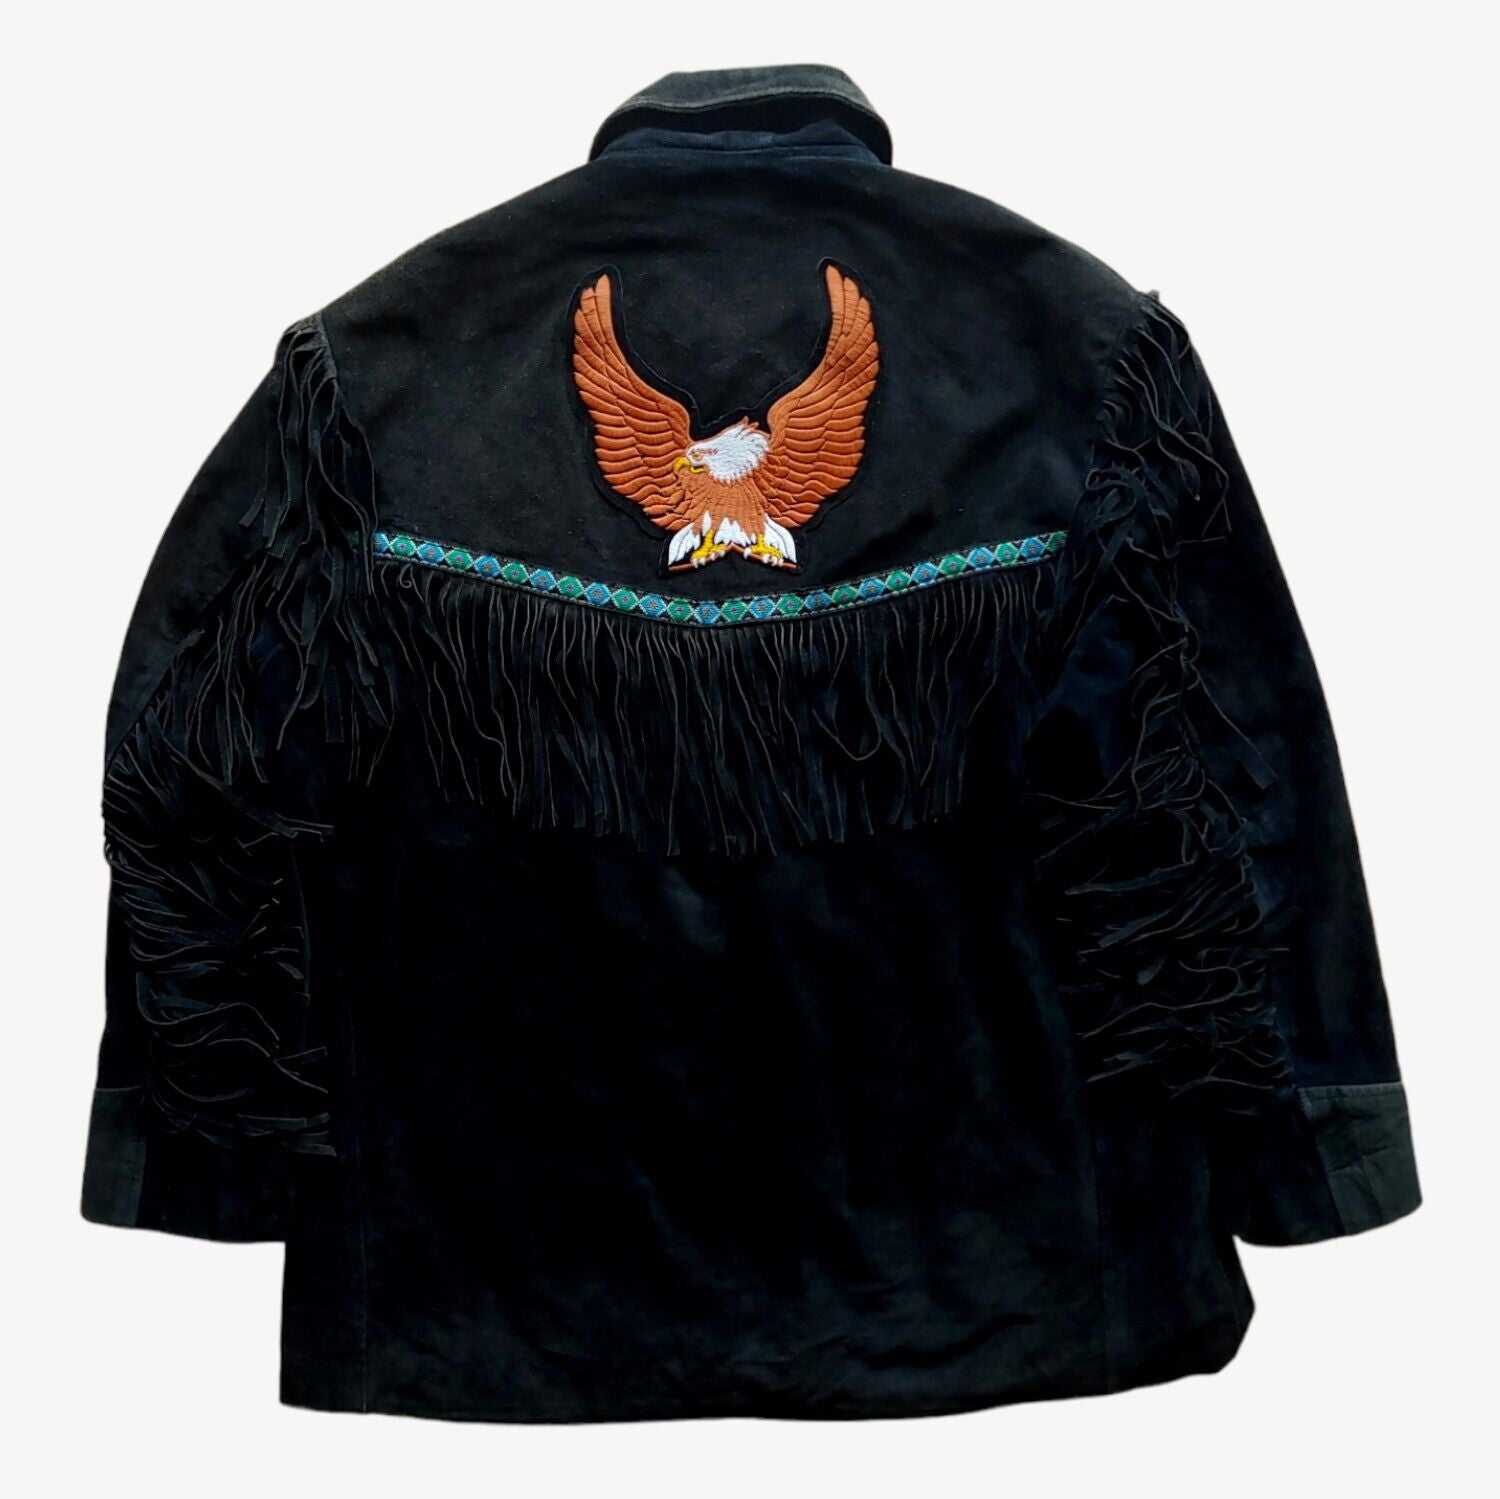 Vintage 1980s Western Fringe Jacket With Embroidered Eagle - Casspios Dream